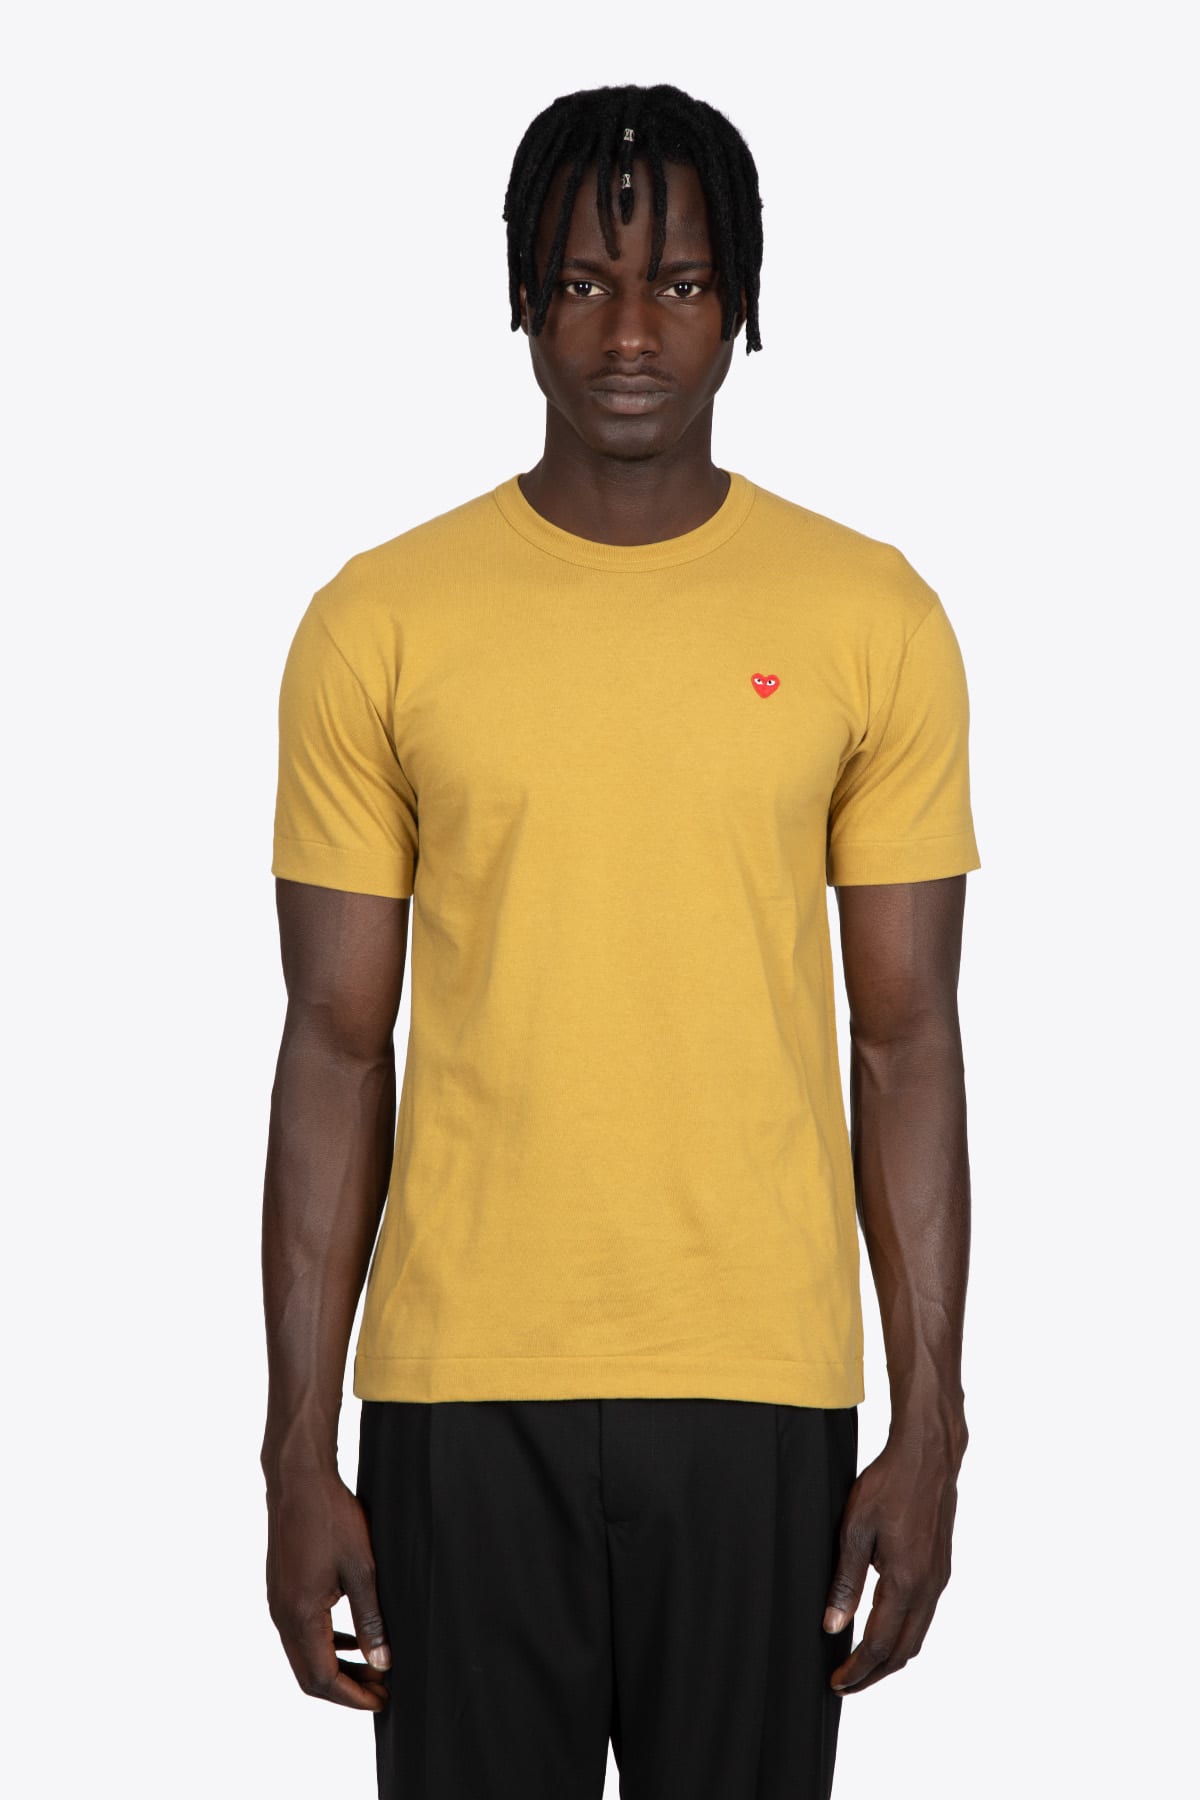 Comme des Garçons Play Mens T-shirt Knit Mustard yellow cotton t-shirt with small heart patch